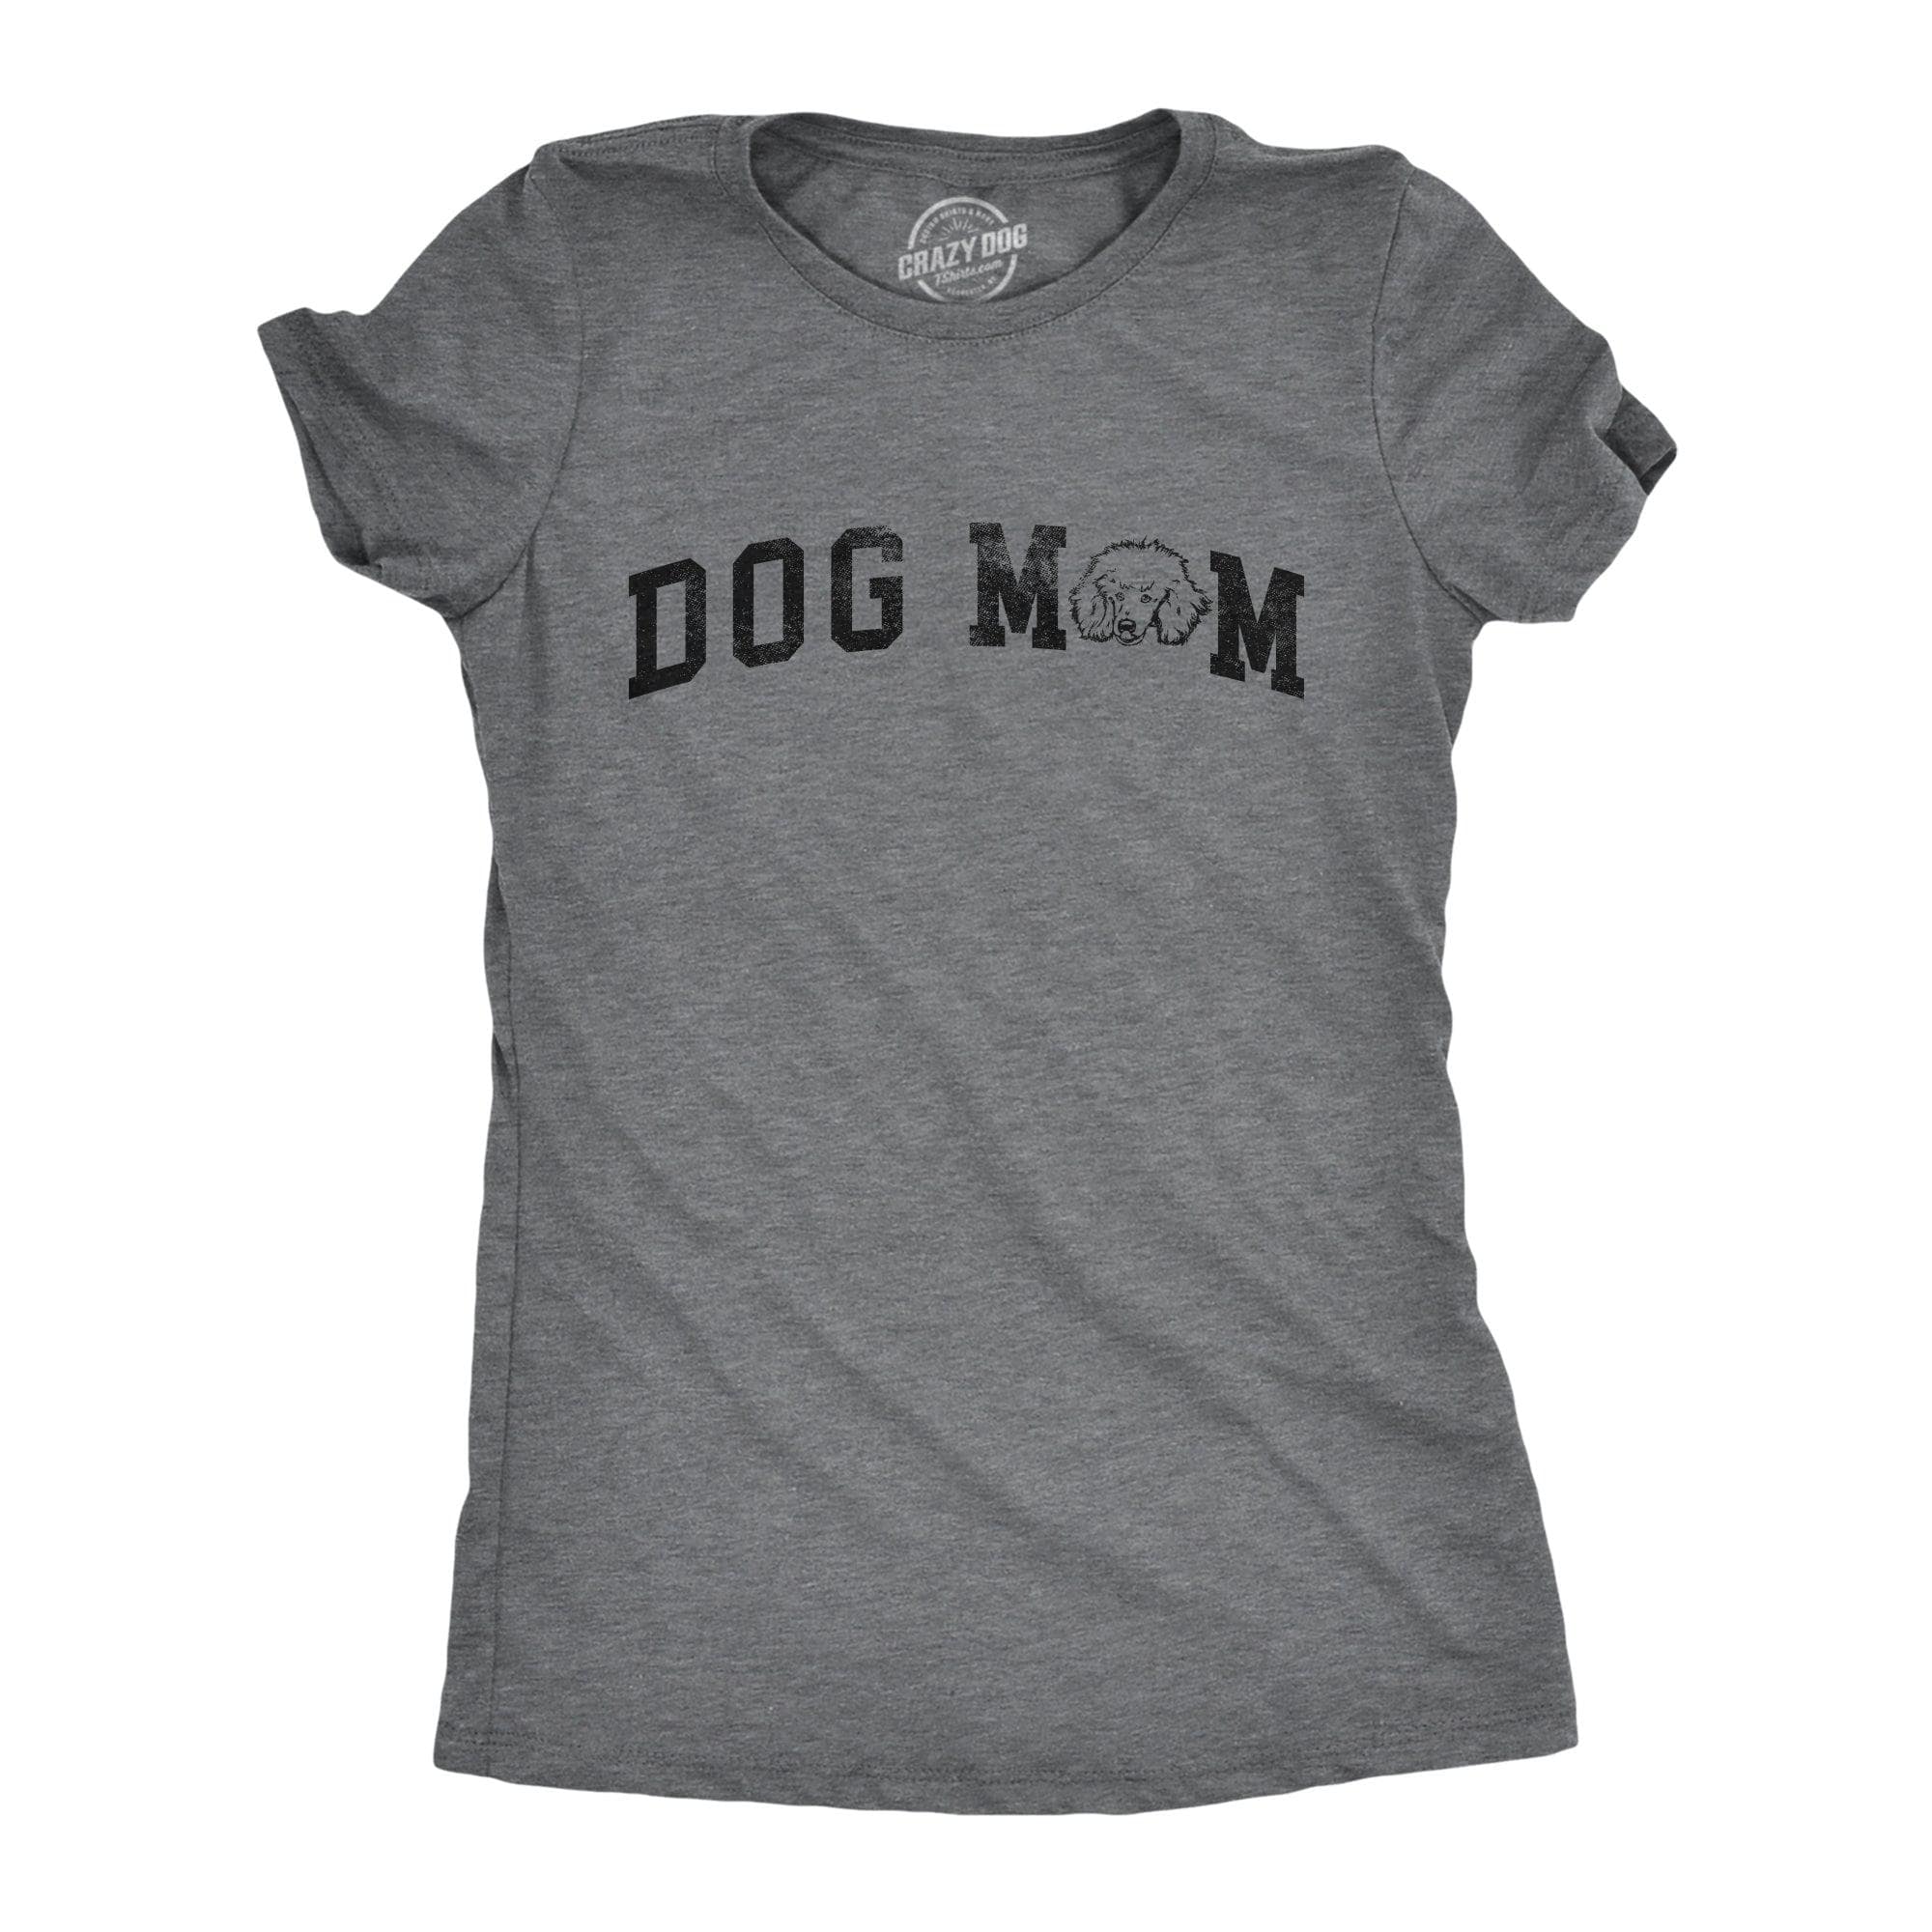 Dog Mom Poodle Women's Tshirt  -  Crazy Dog T-Shirts